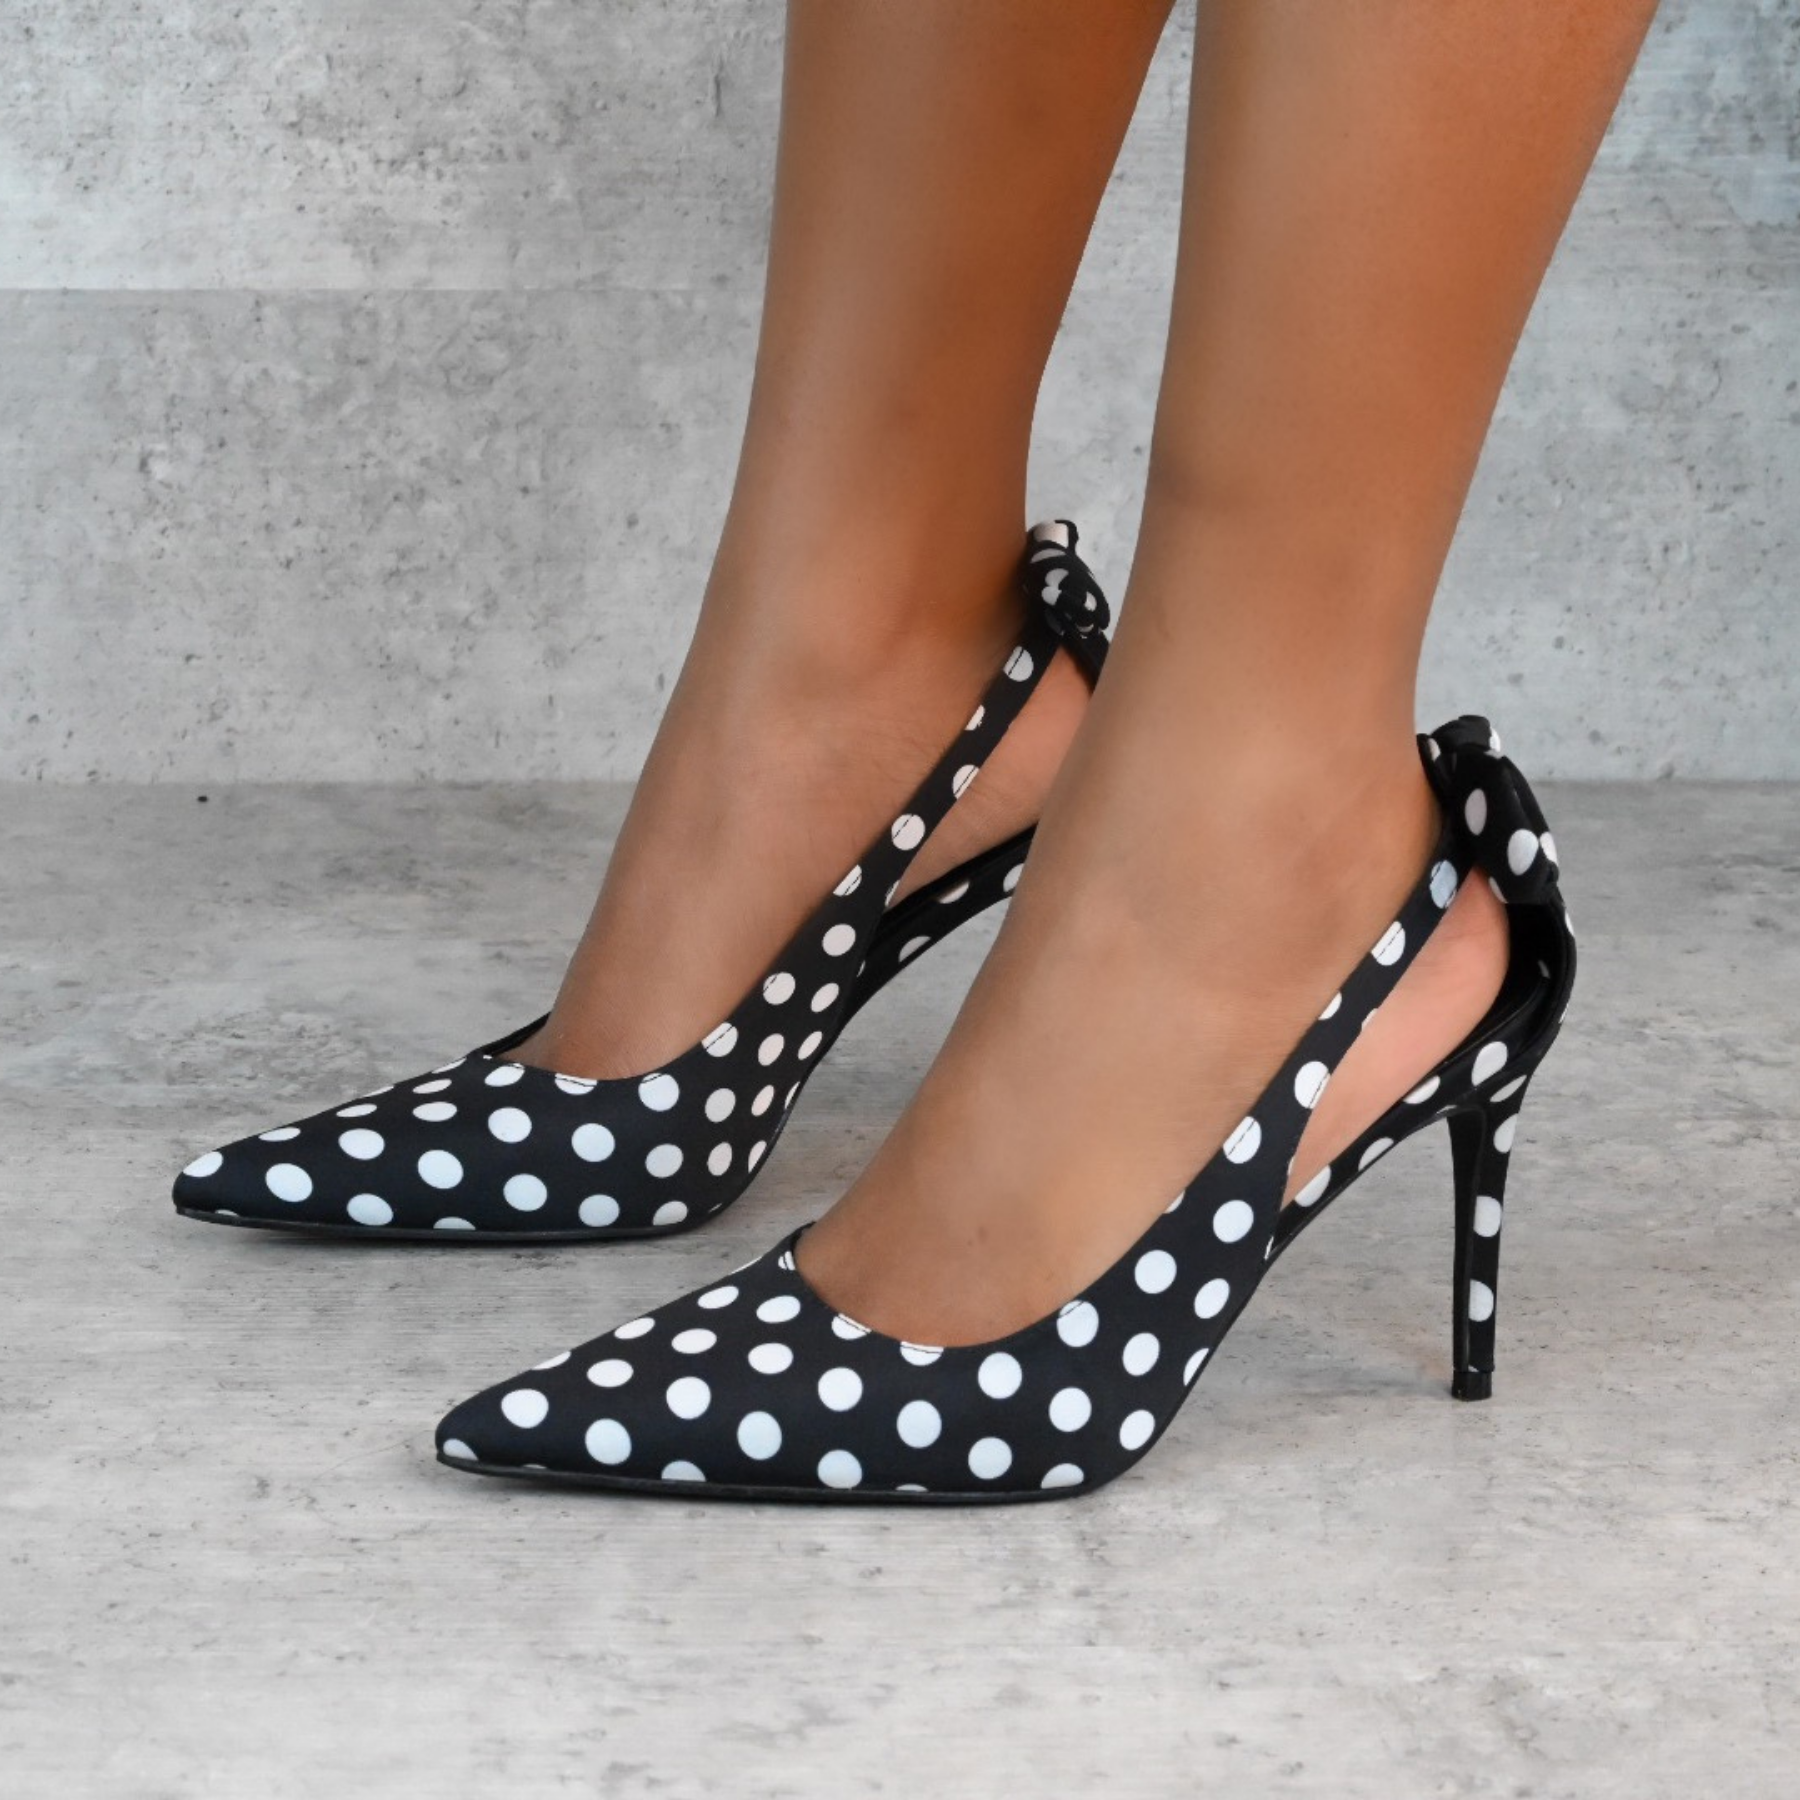 Kenly 9cm heel polka dot with a back bow black